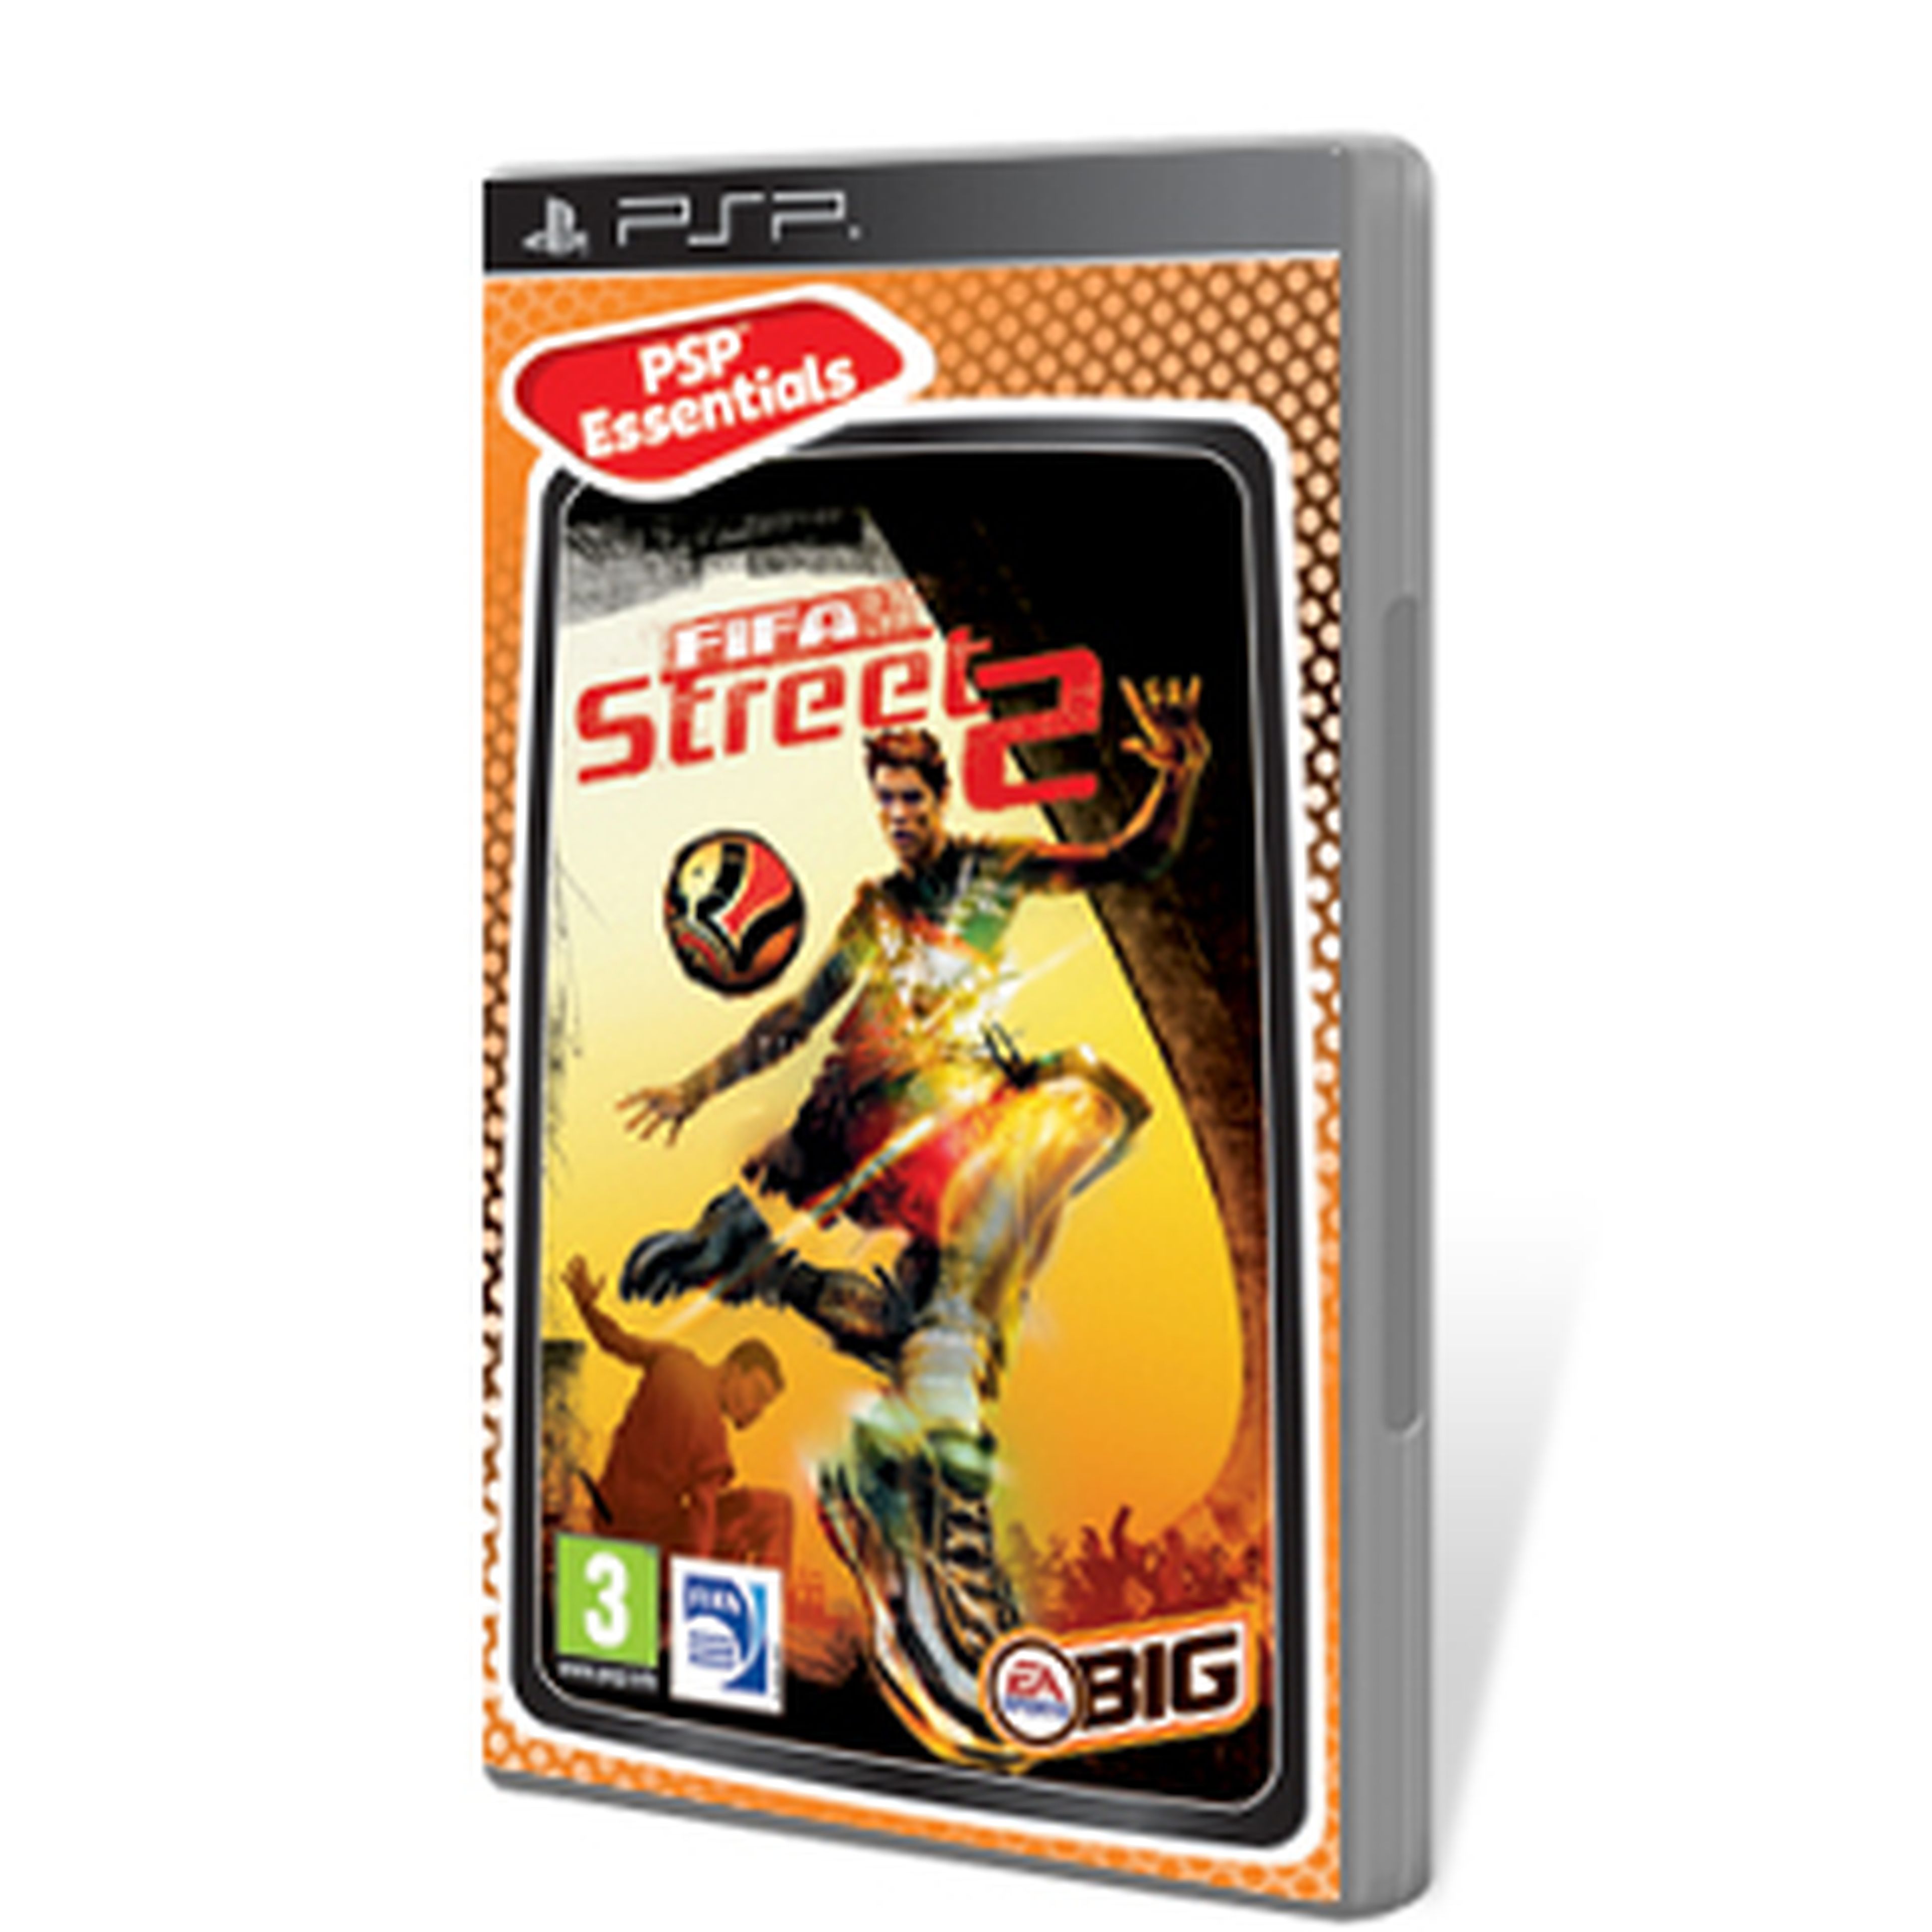 FIFA Street 2 para PSP